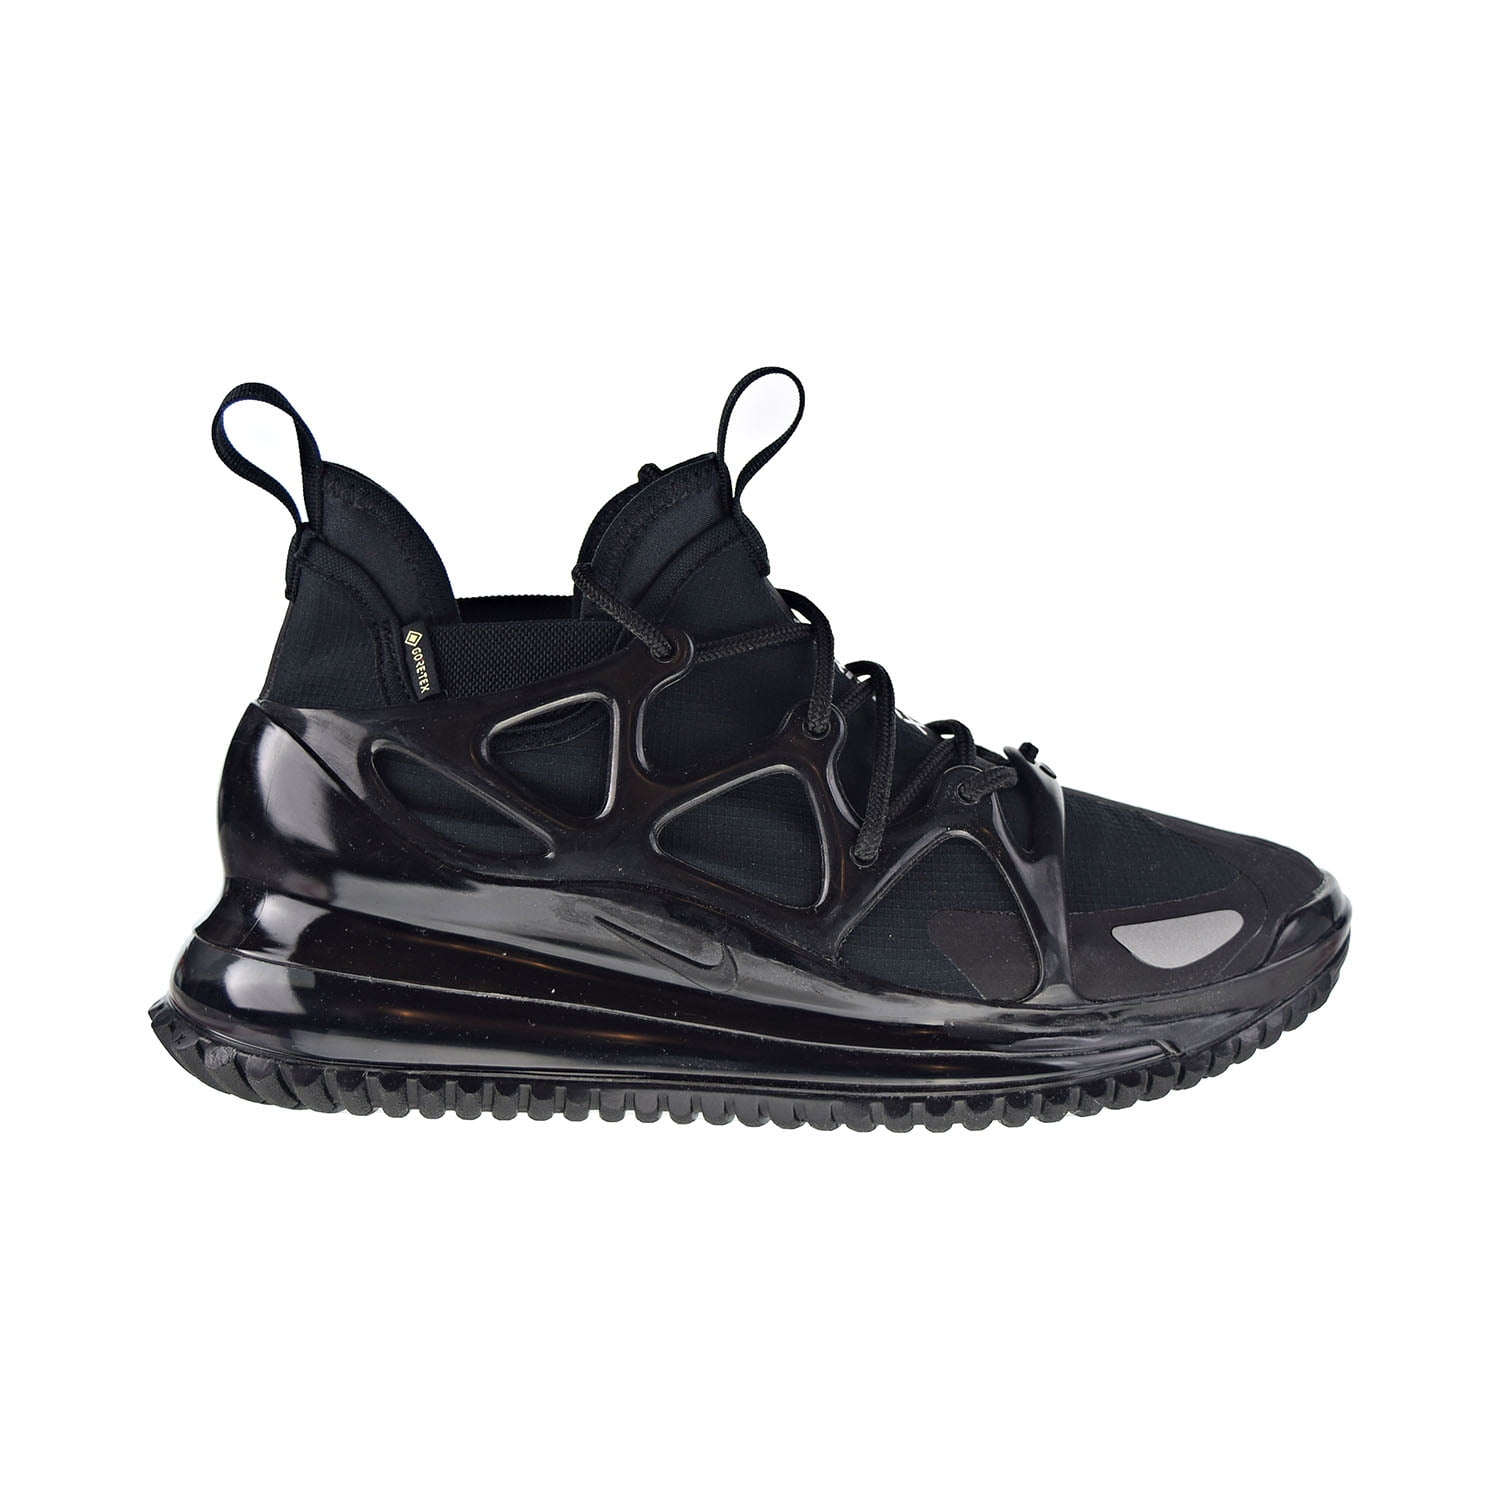 Niet meer geldig nek kiem Nike Air Max 720 Horizon Gore-Tex Men's Shoes Black bq5808-002 - Walmart.com